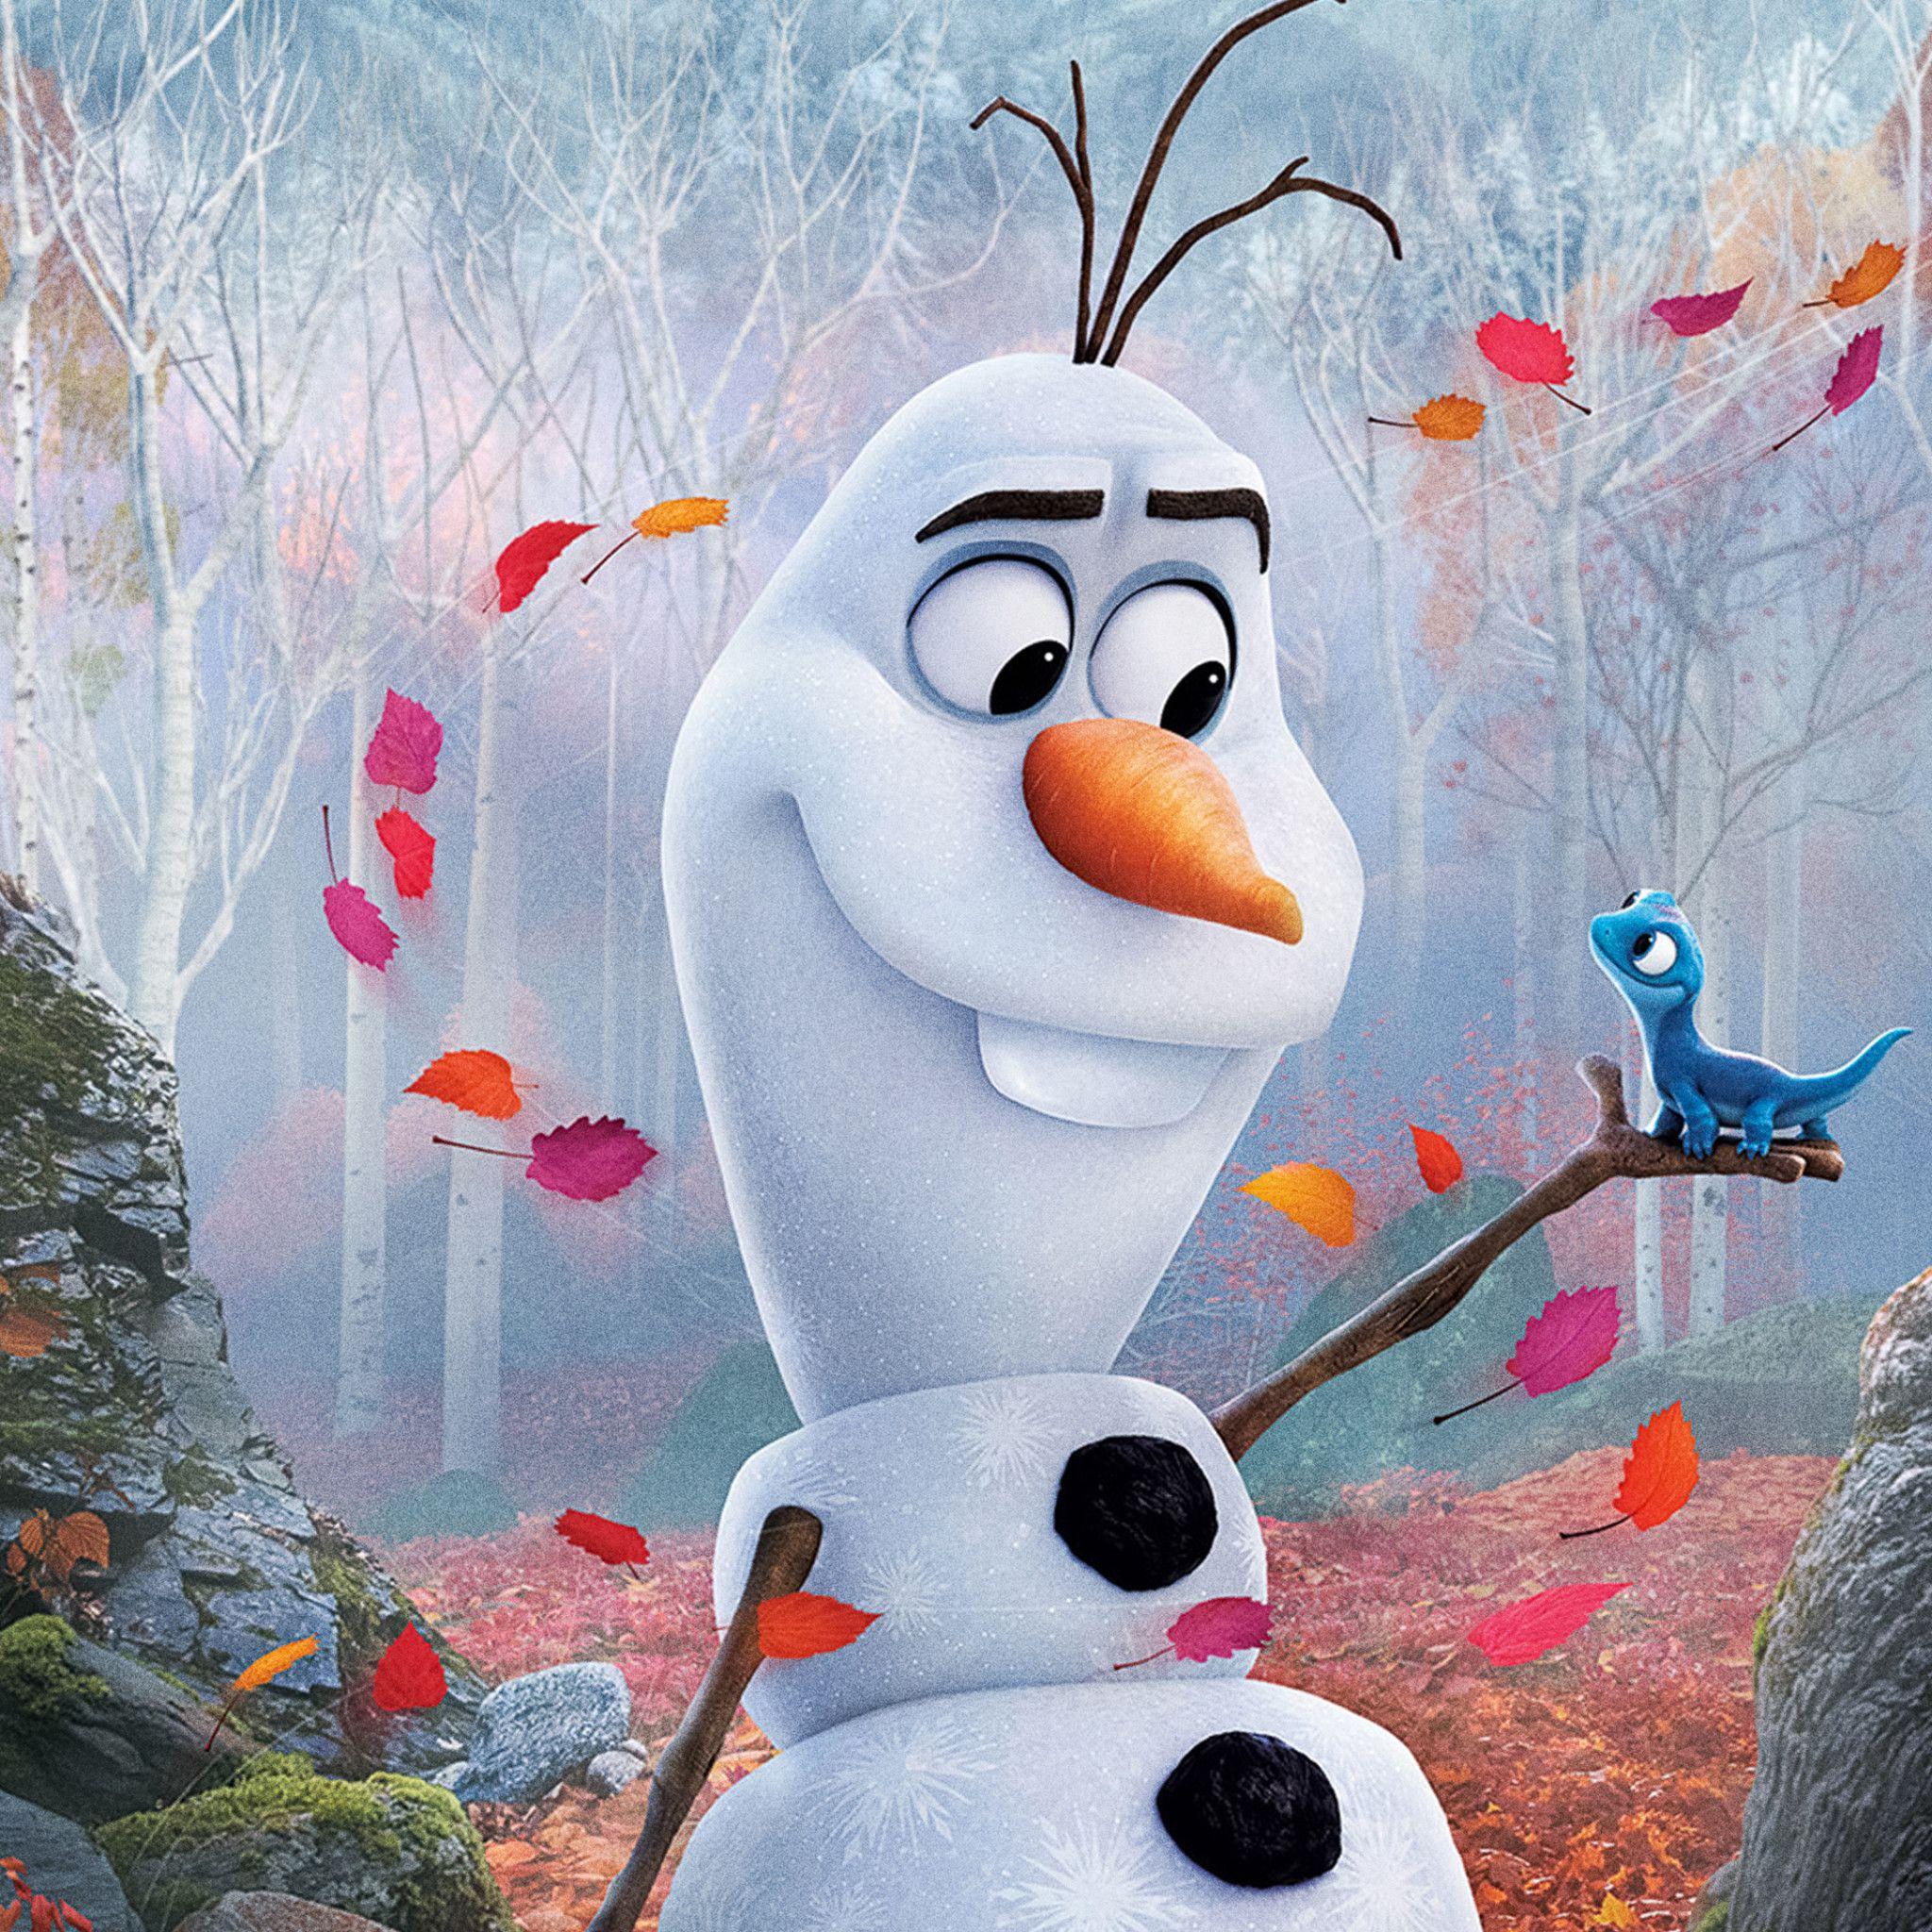 Olaf In Frozen 2 2019 iPad Air HD 4k Wallpaper, Image